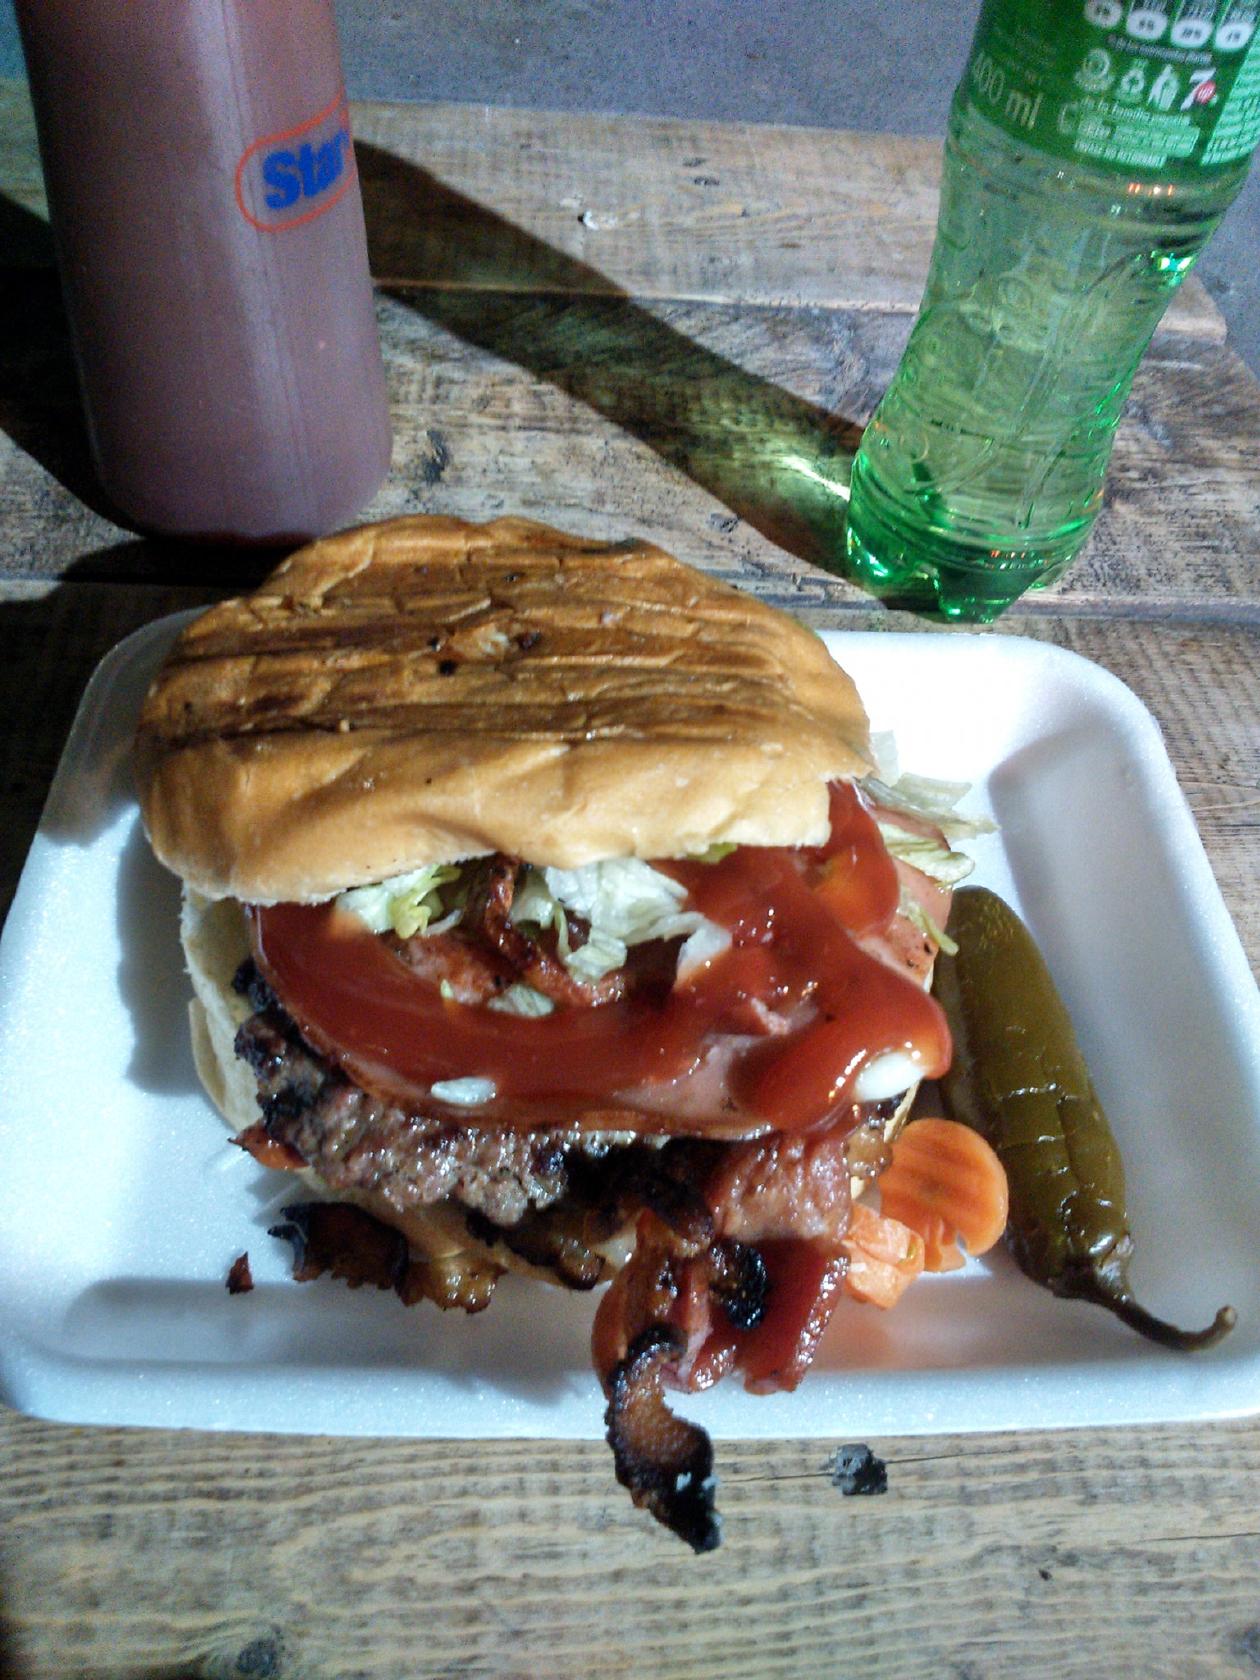 Banjir kfc price burger 22 Jul